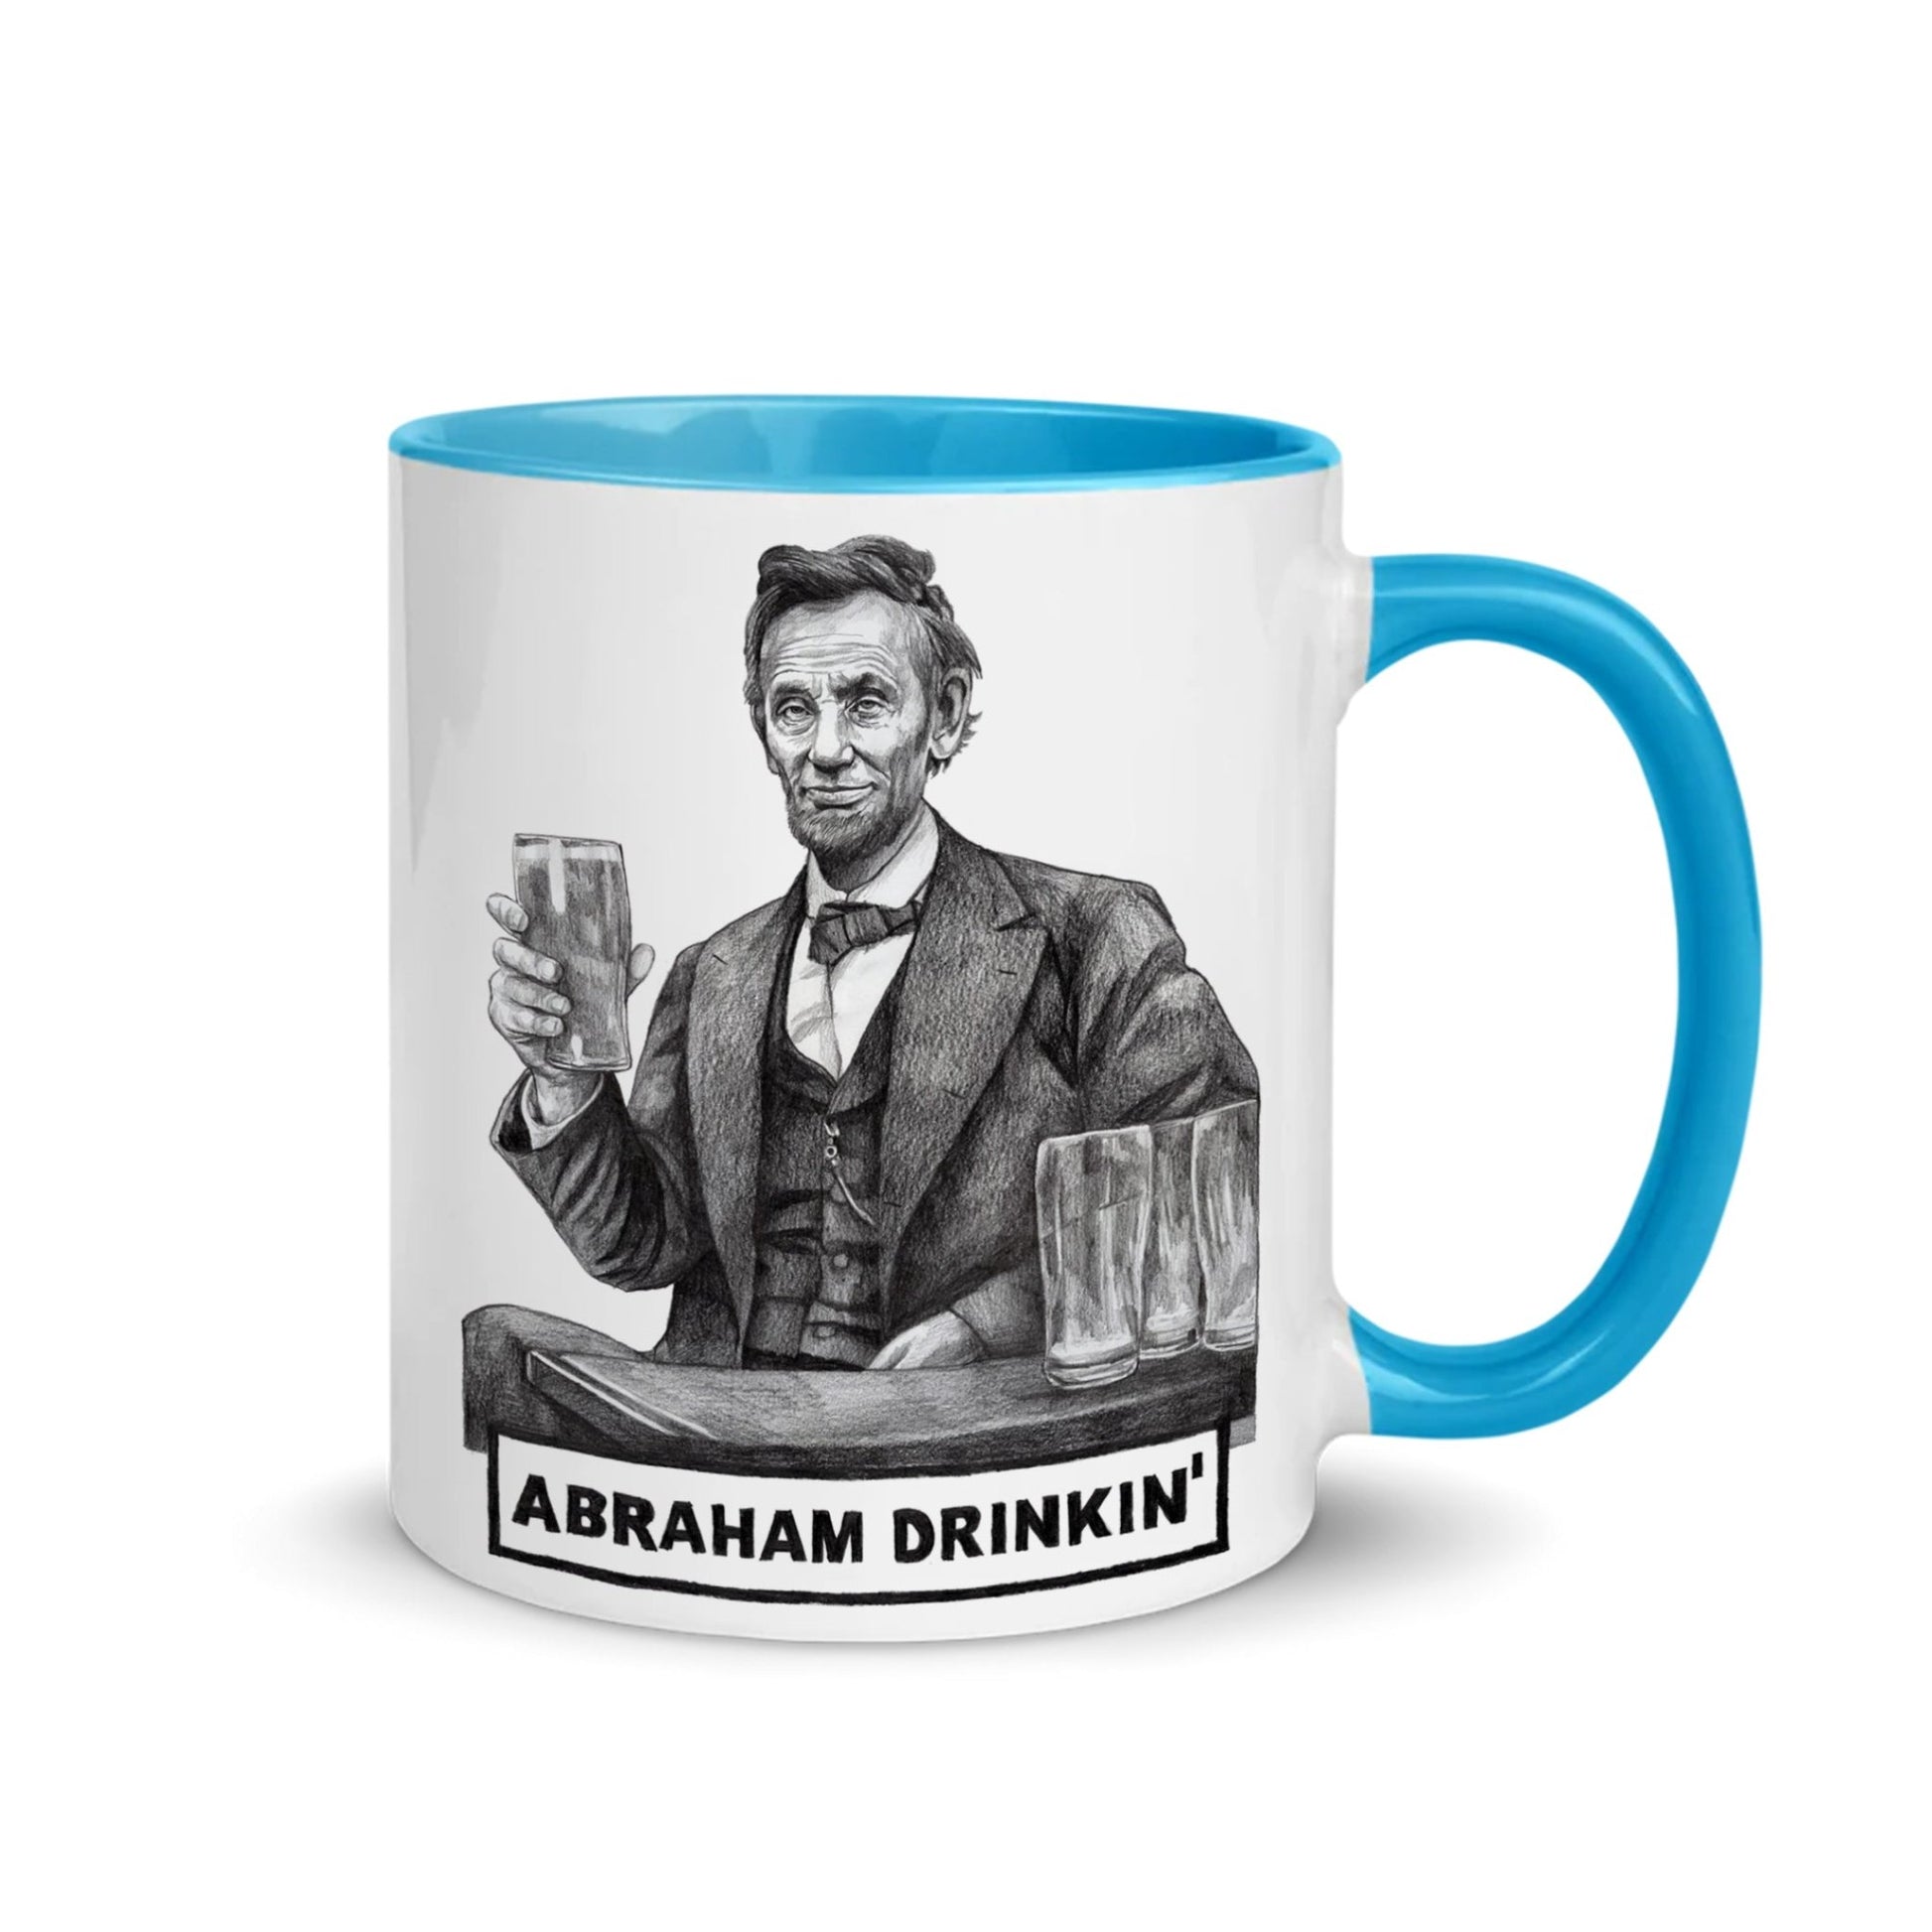 Abraham Drinkin' Ceramic Mug - Quite Good Cards Funny Birthday Card